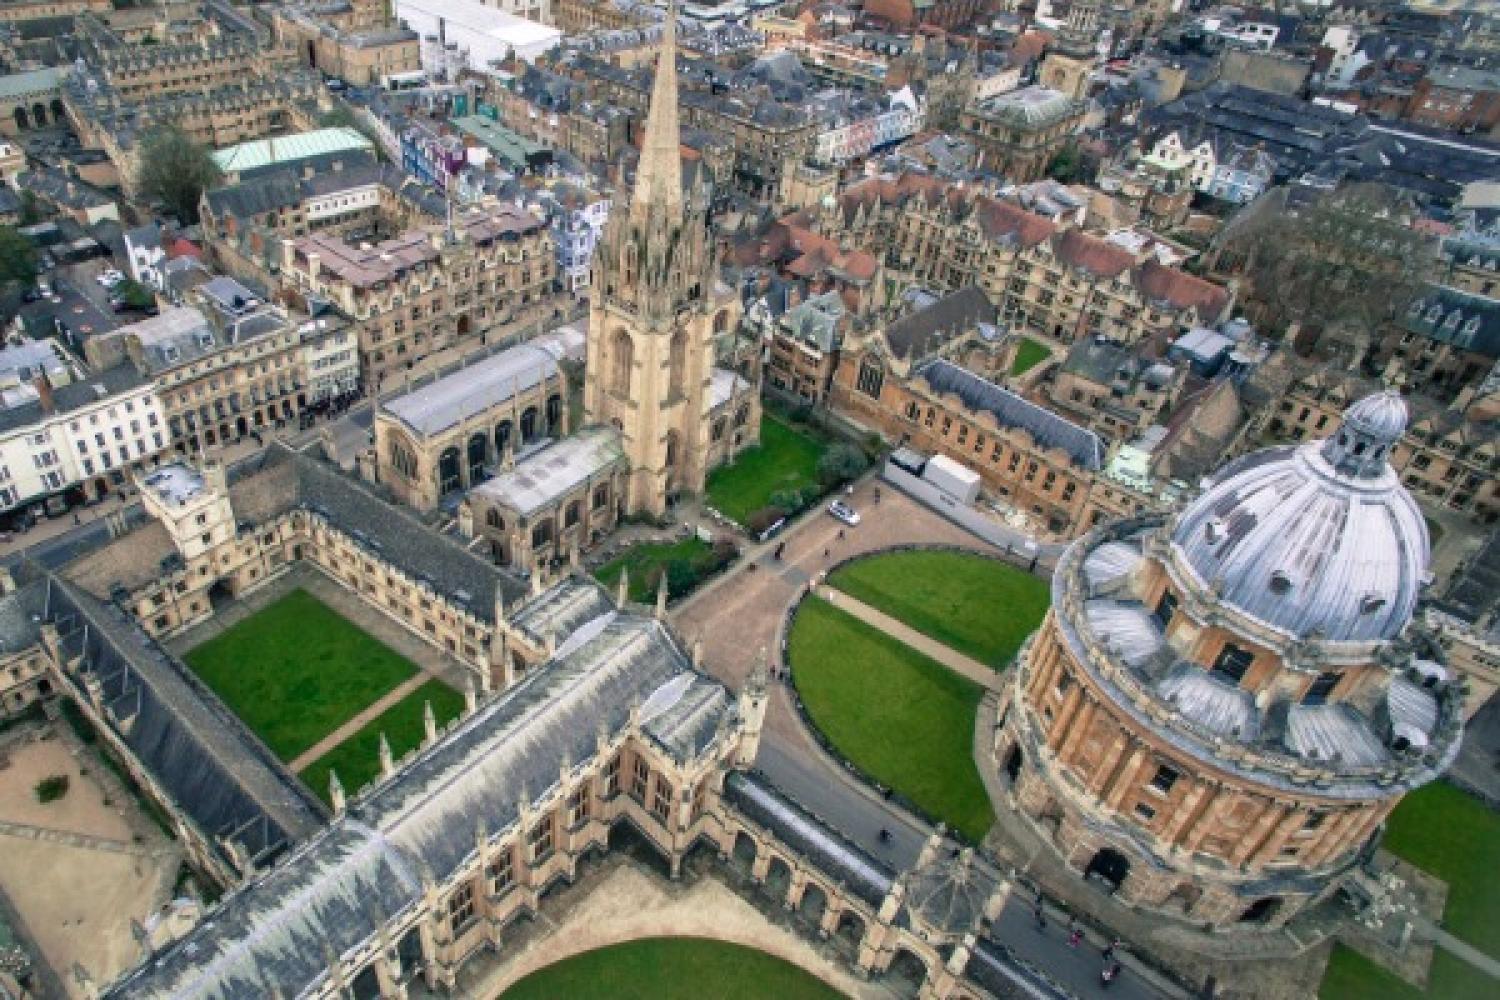 A bird's eye view of Oxford